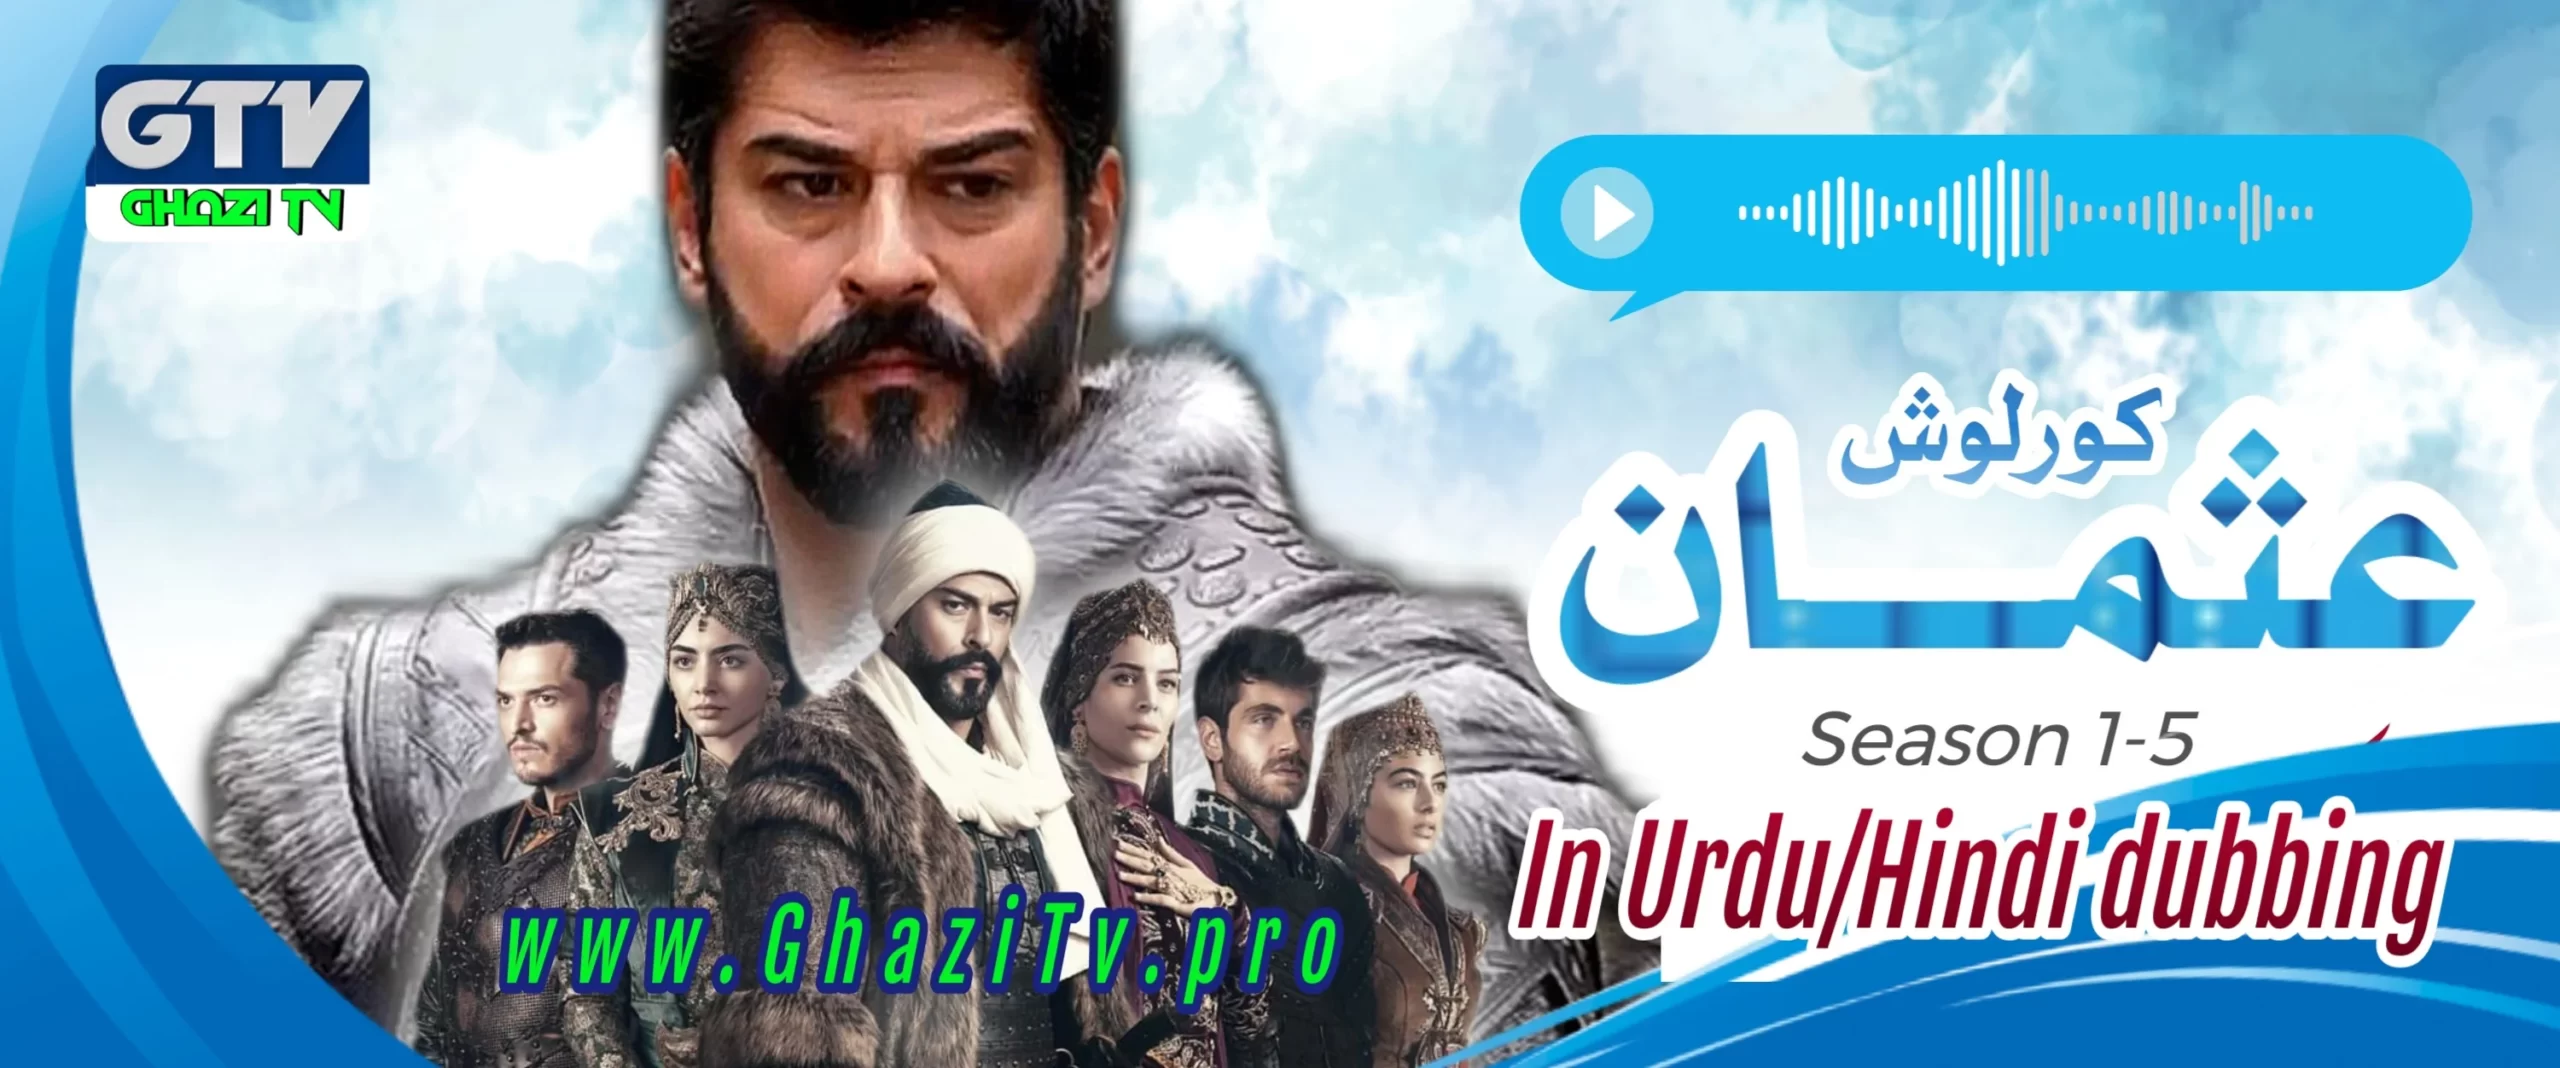 Kurulus Osman season 5 in Urdu/Hindi Dubbing